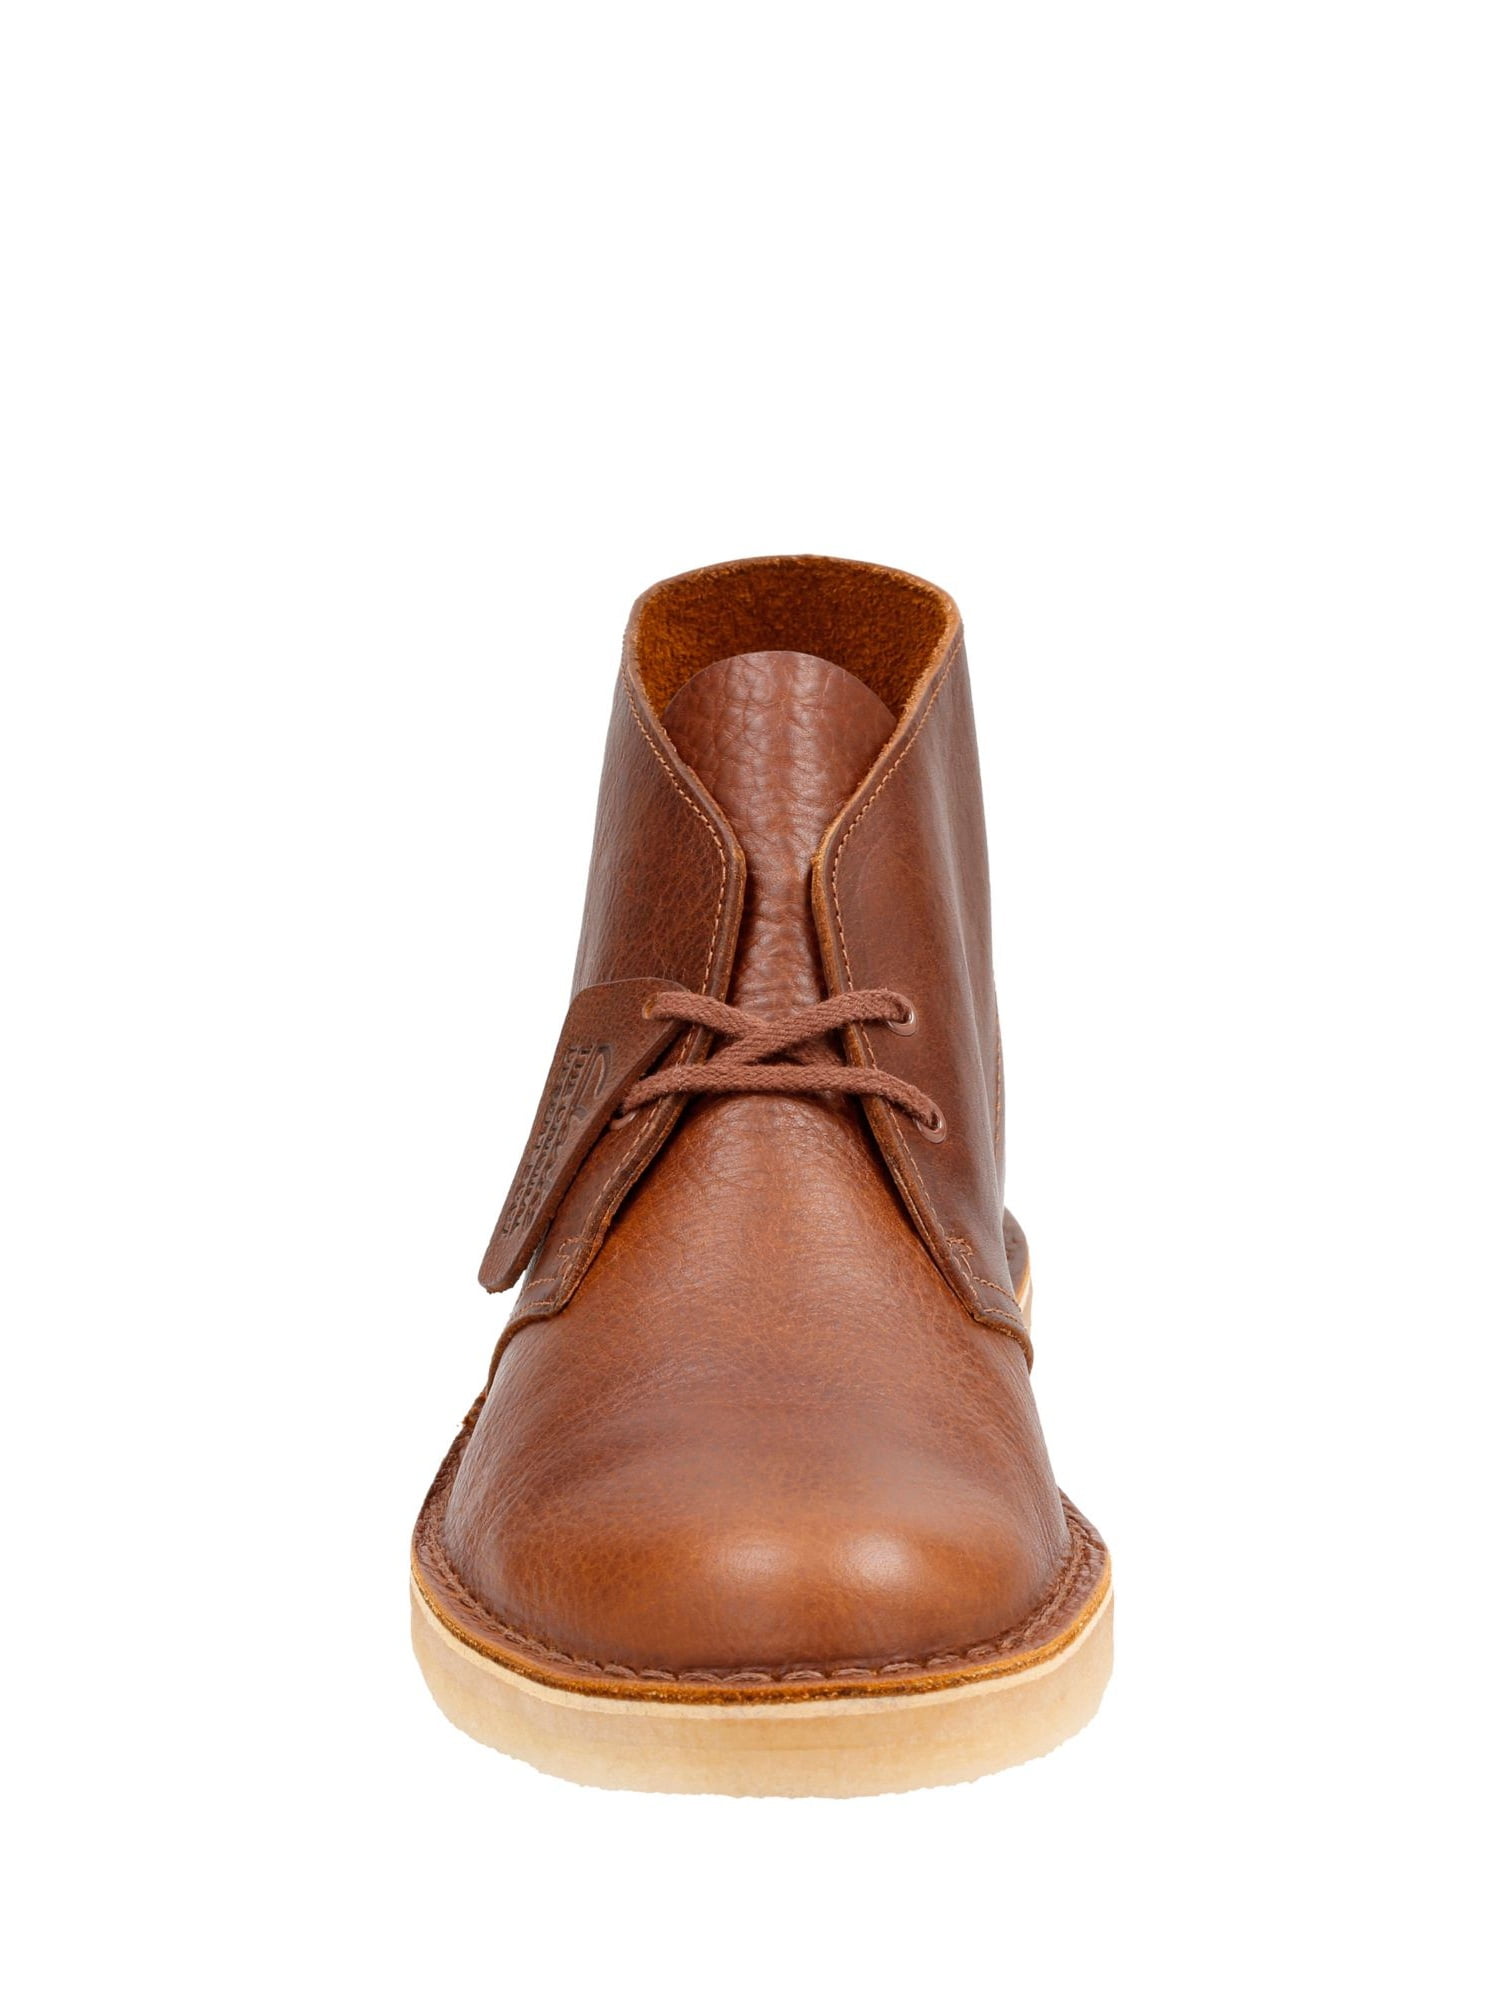 Clarks Originals Desert Men's Brown Tumbled Leather Chukka Boots 26104990 